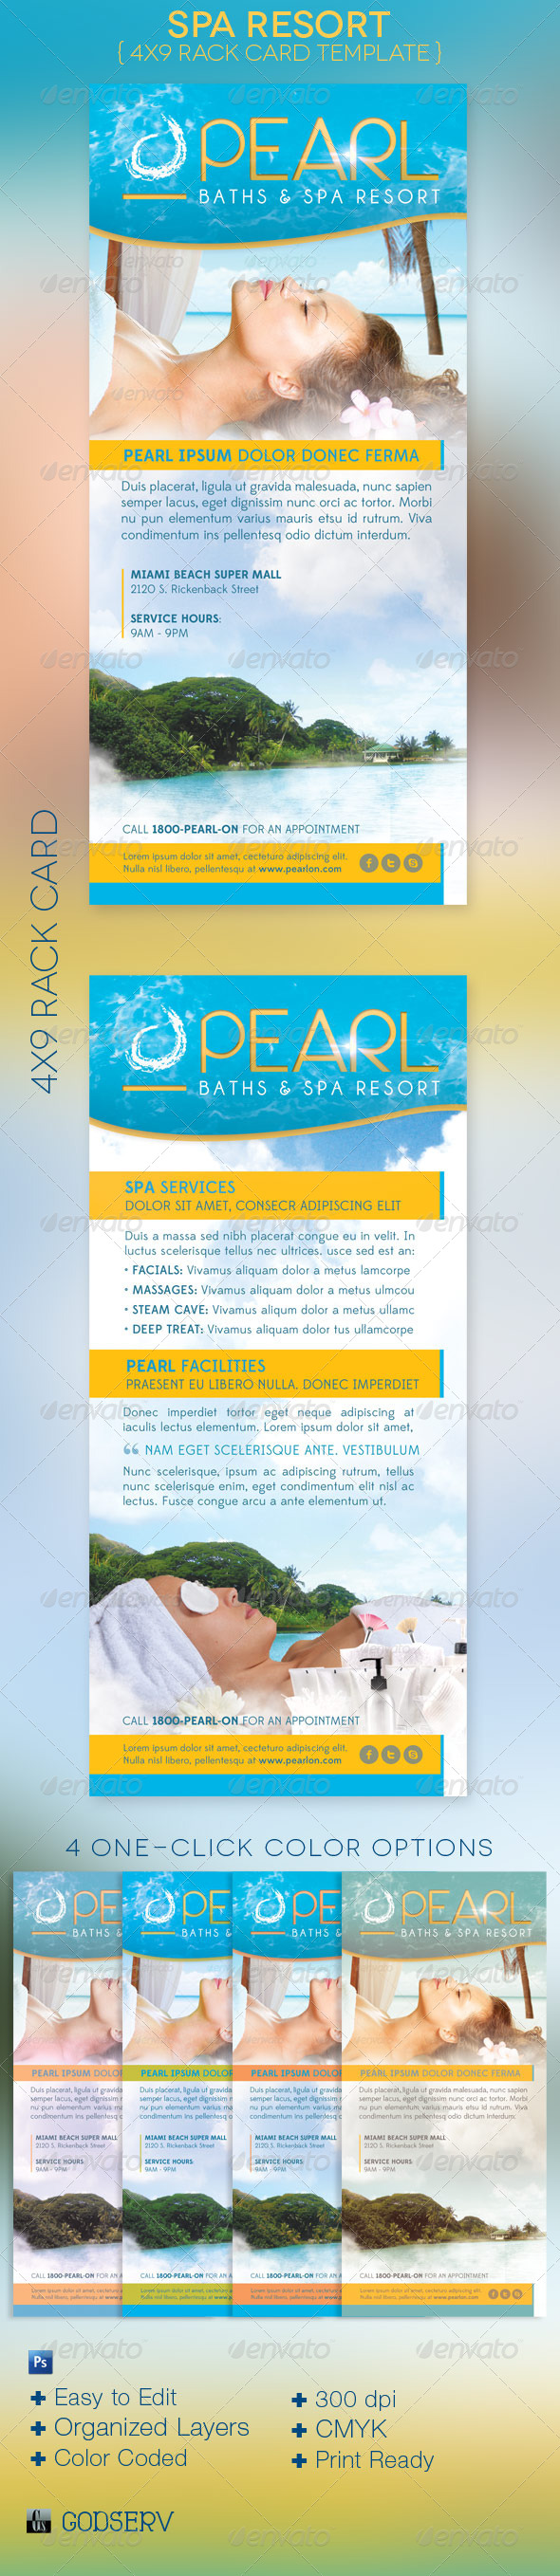 Spa-Resort-Rack-Card-Template-Preview